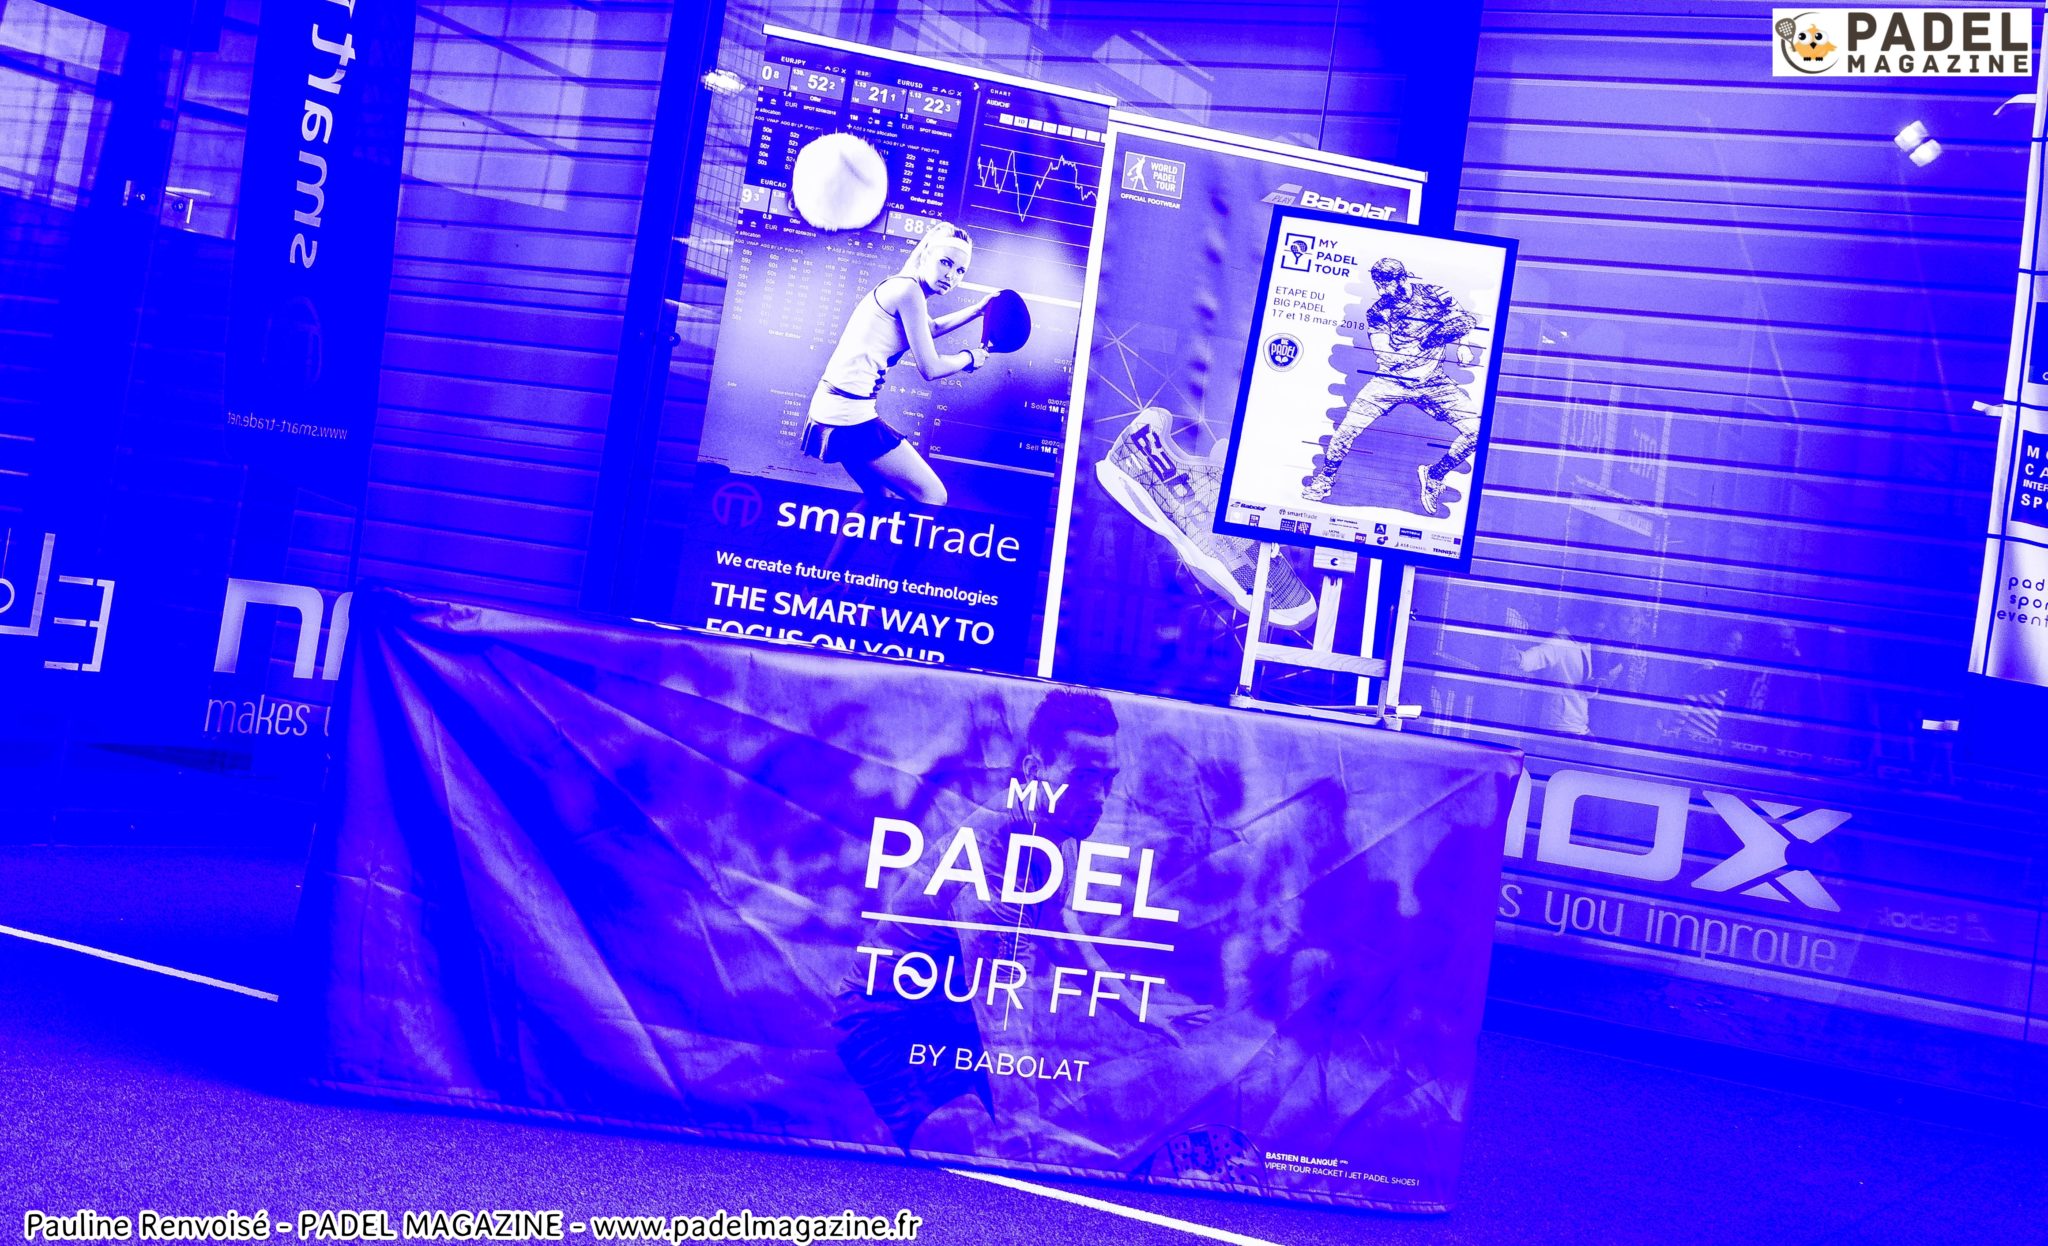 Käytännesäännöt padel - MINUN PADEL TOUR